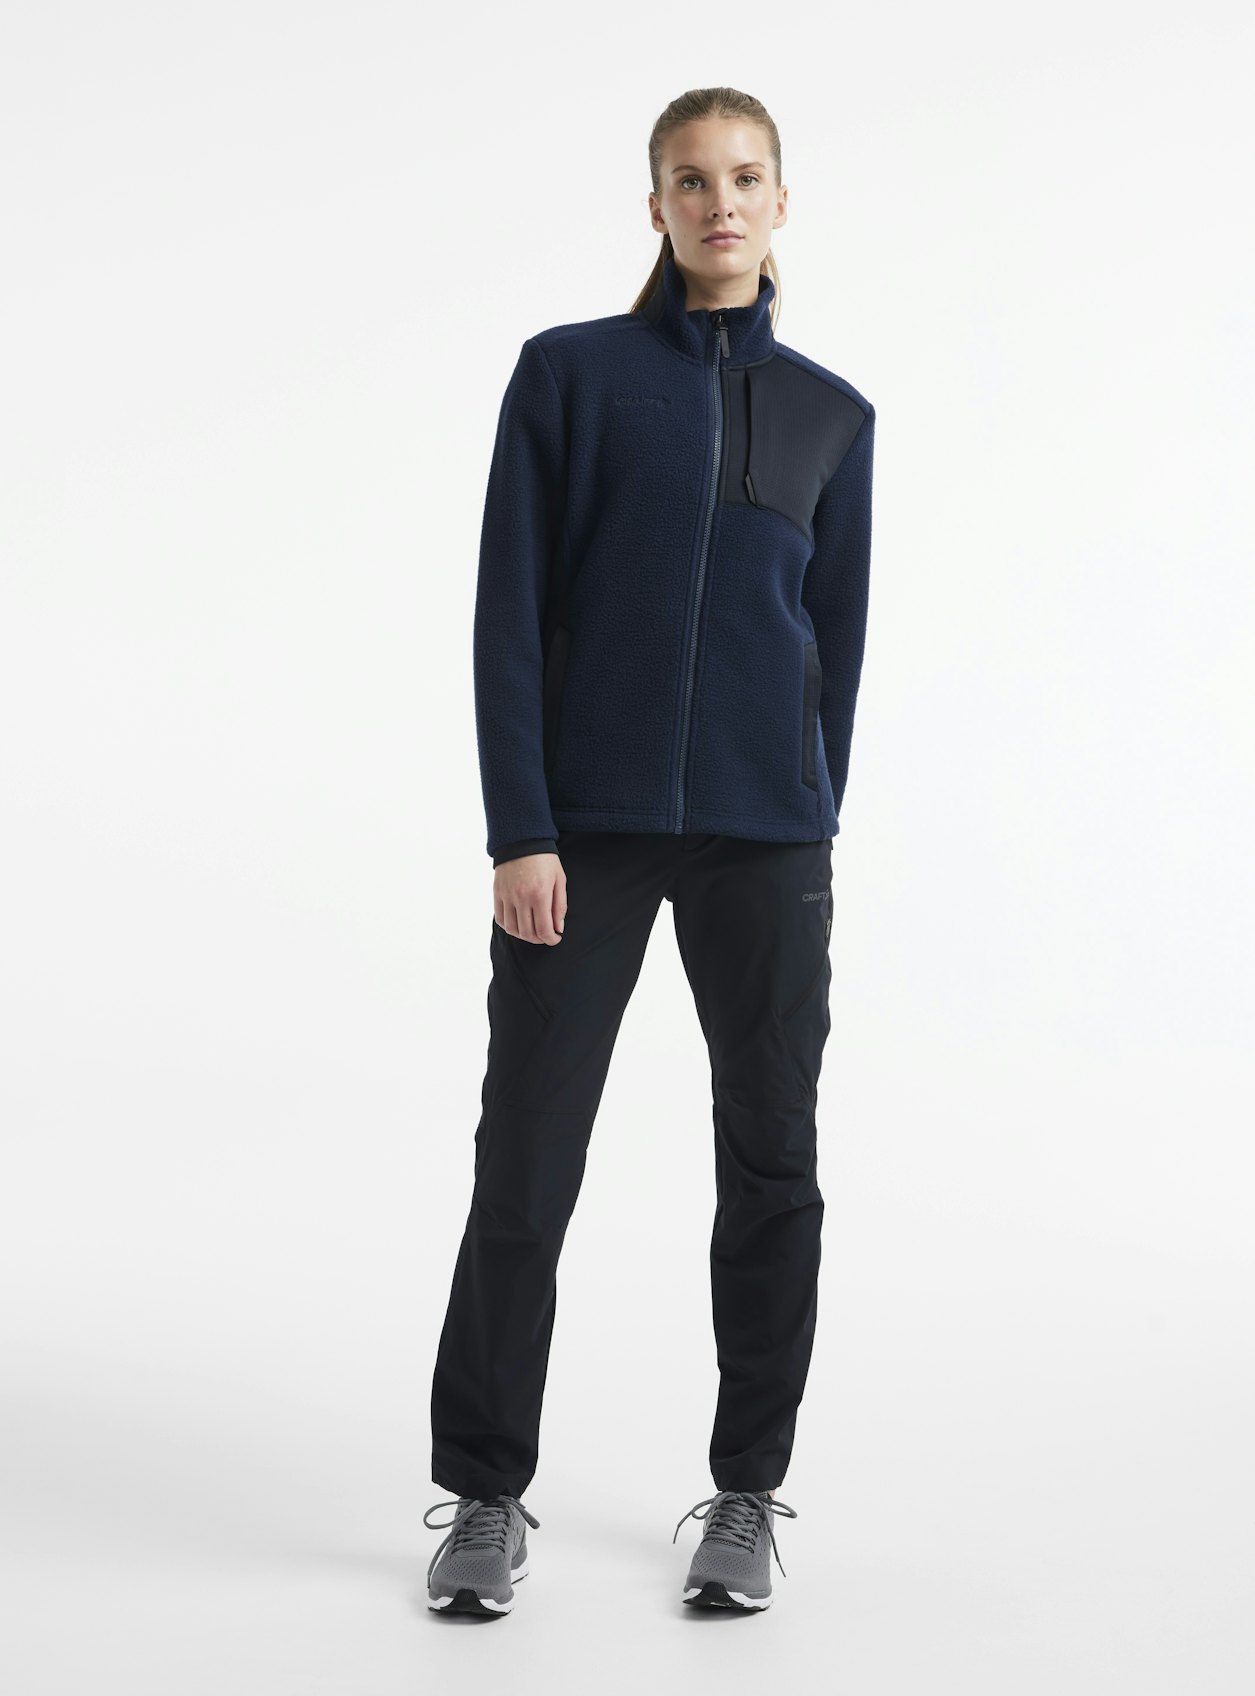 ADV Explore Pile Fleece Jacket W - Navy blue | Craft Sportswear